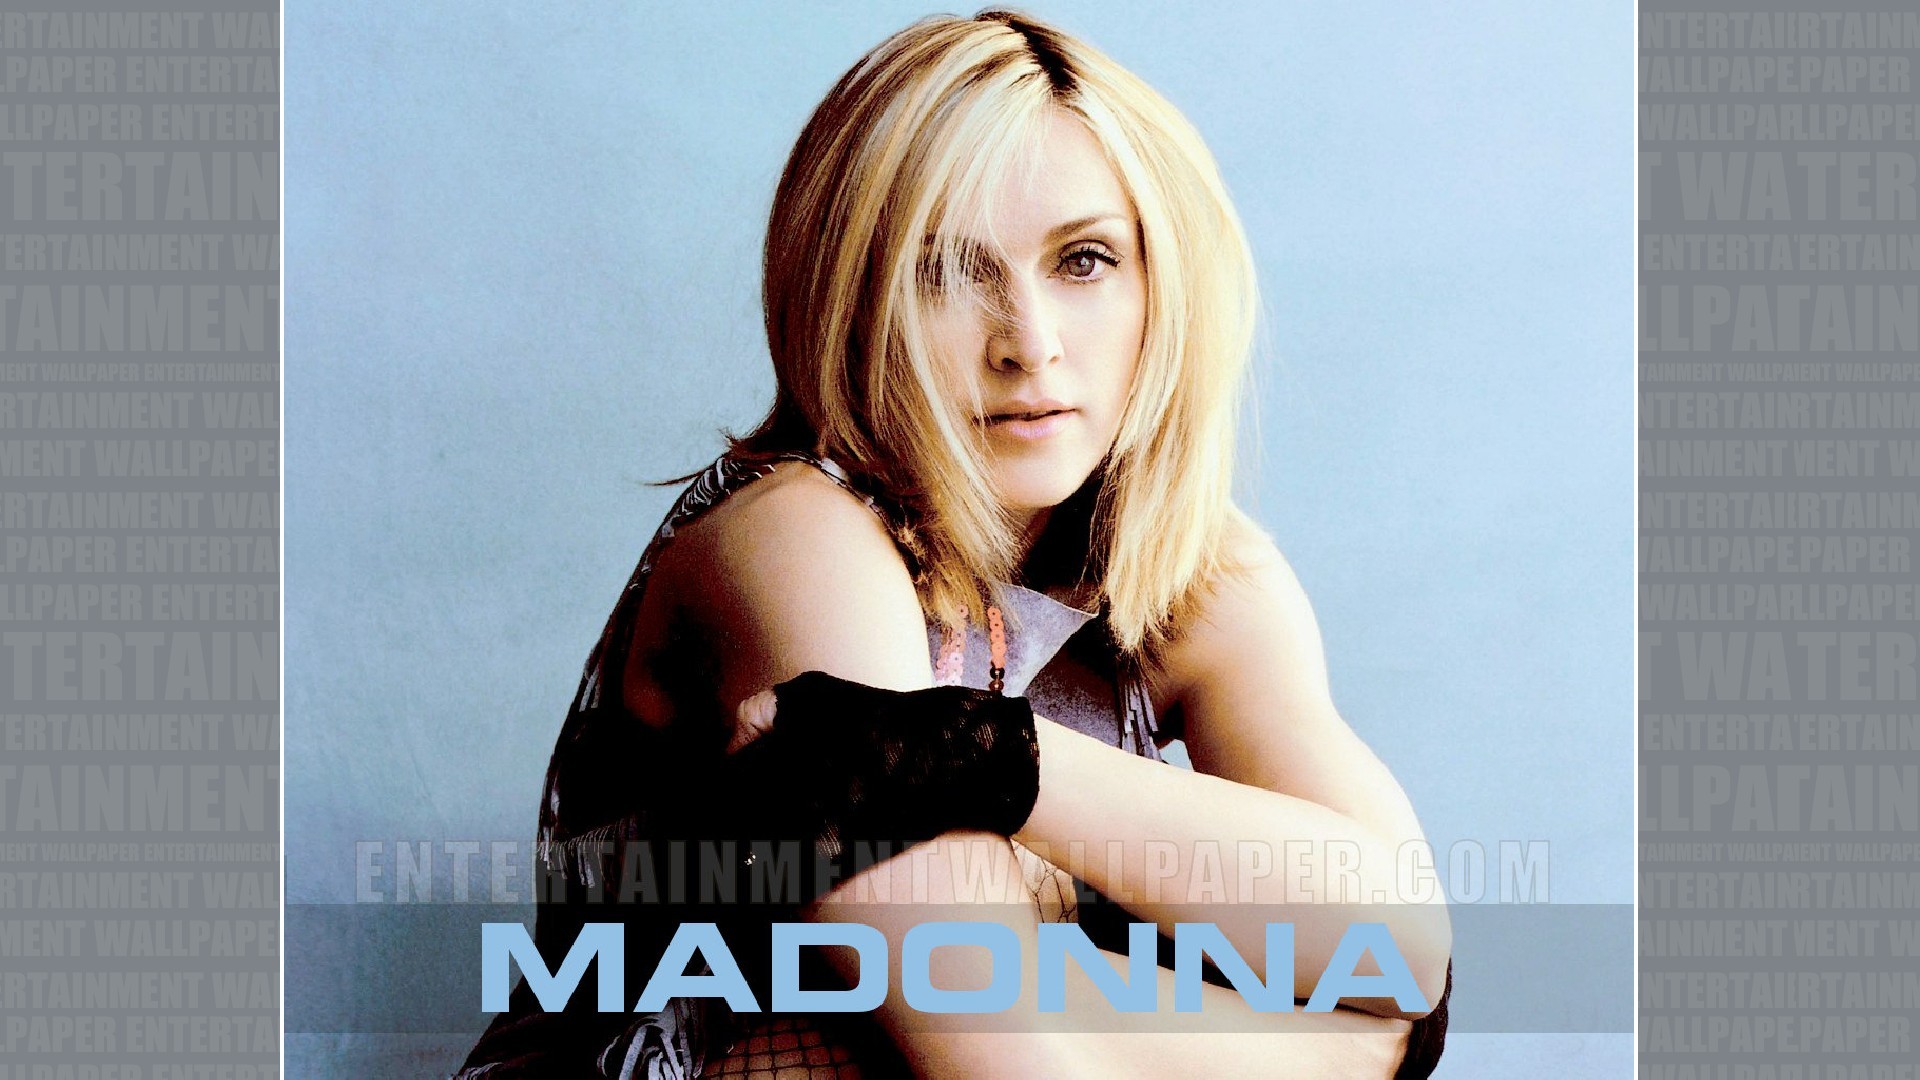 1920x1080 Madonna Wallpaper - Original size, download now.